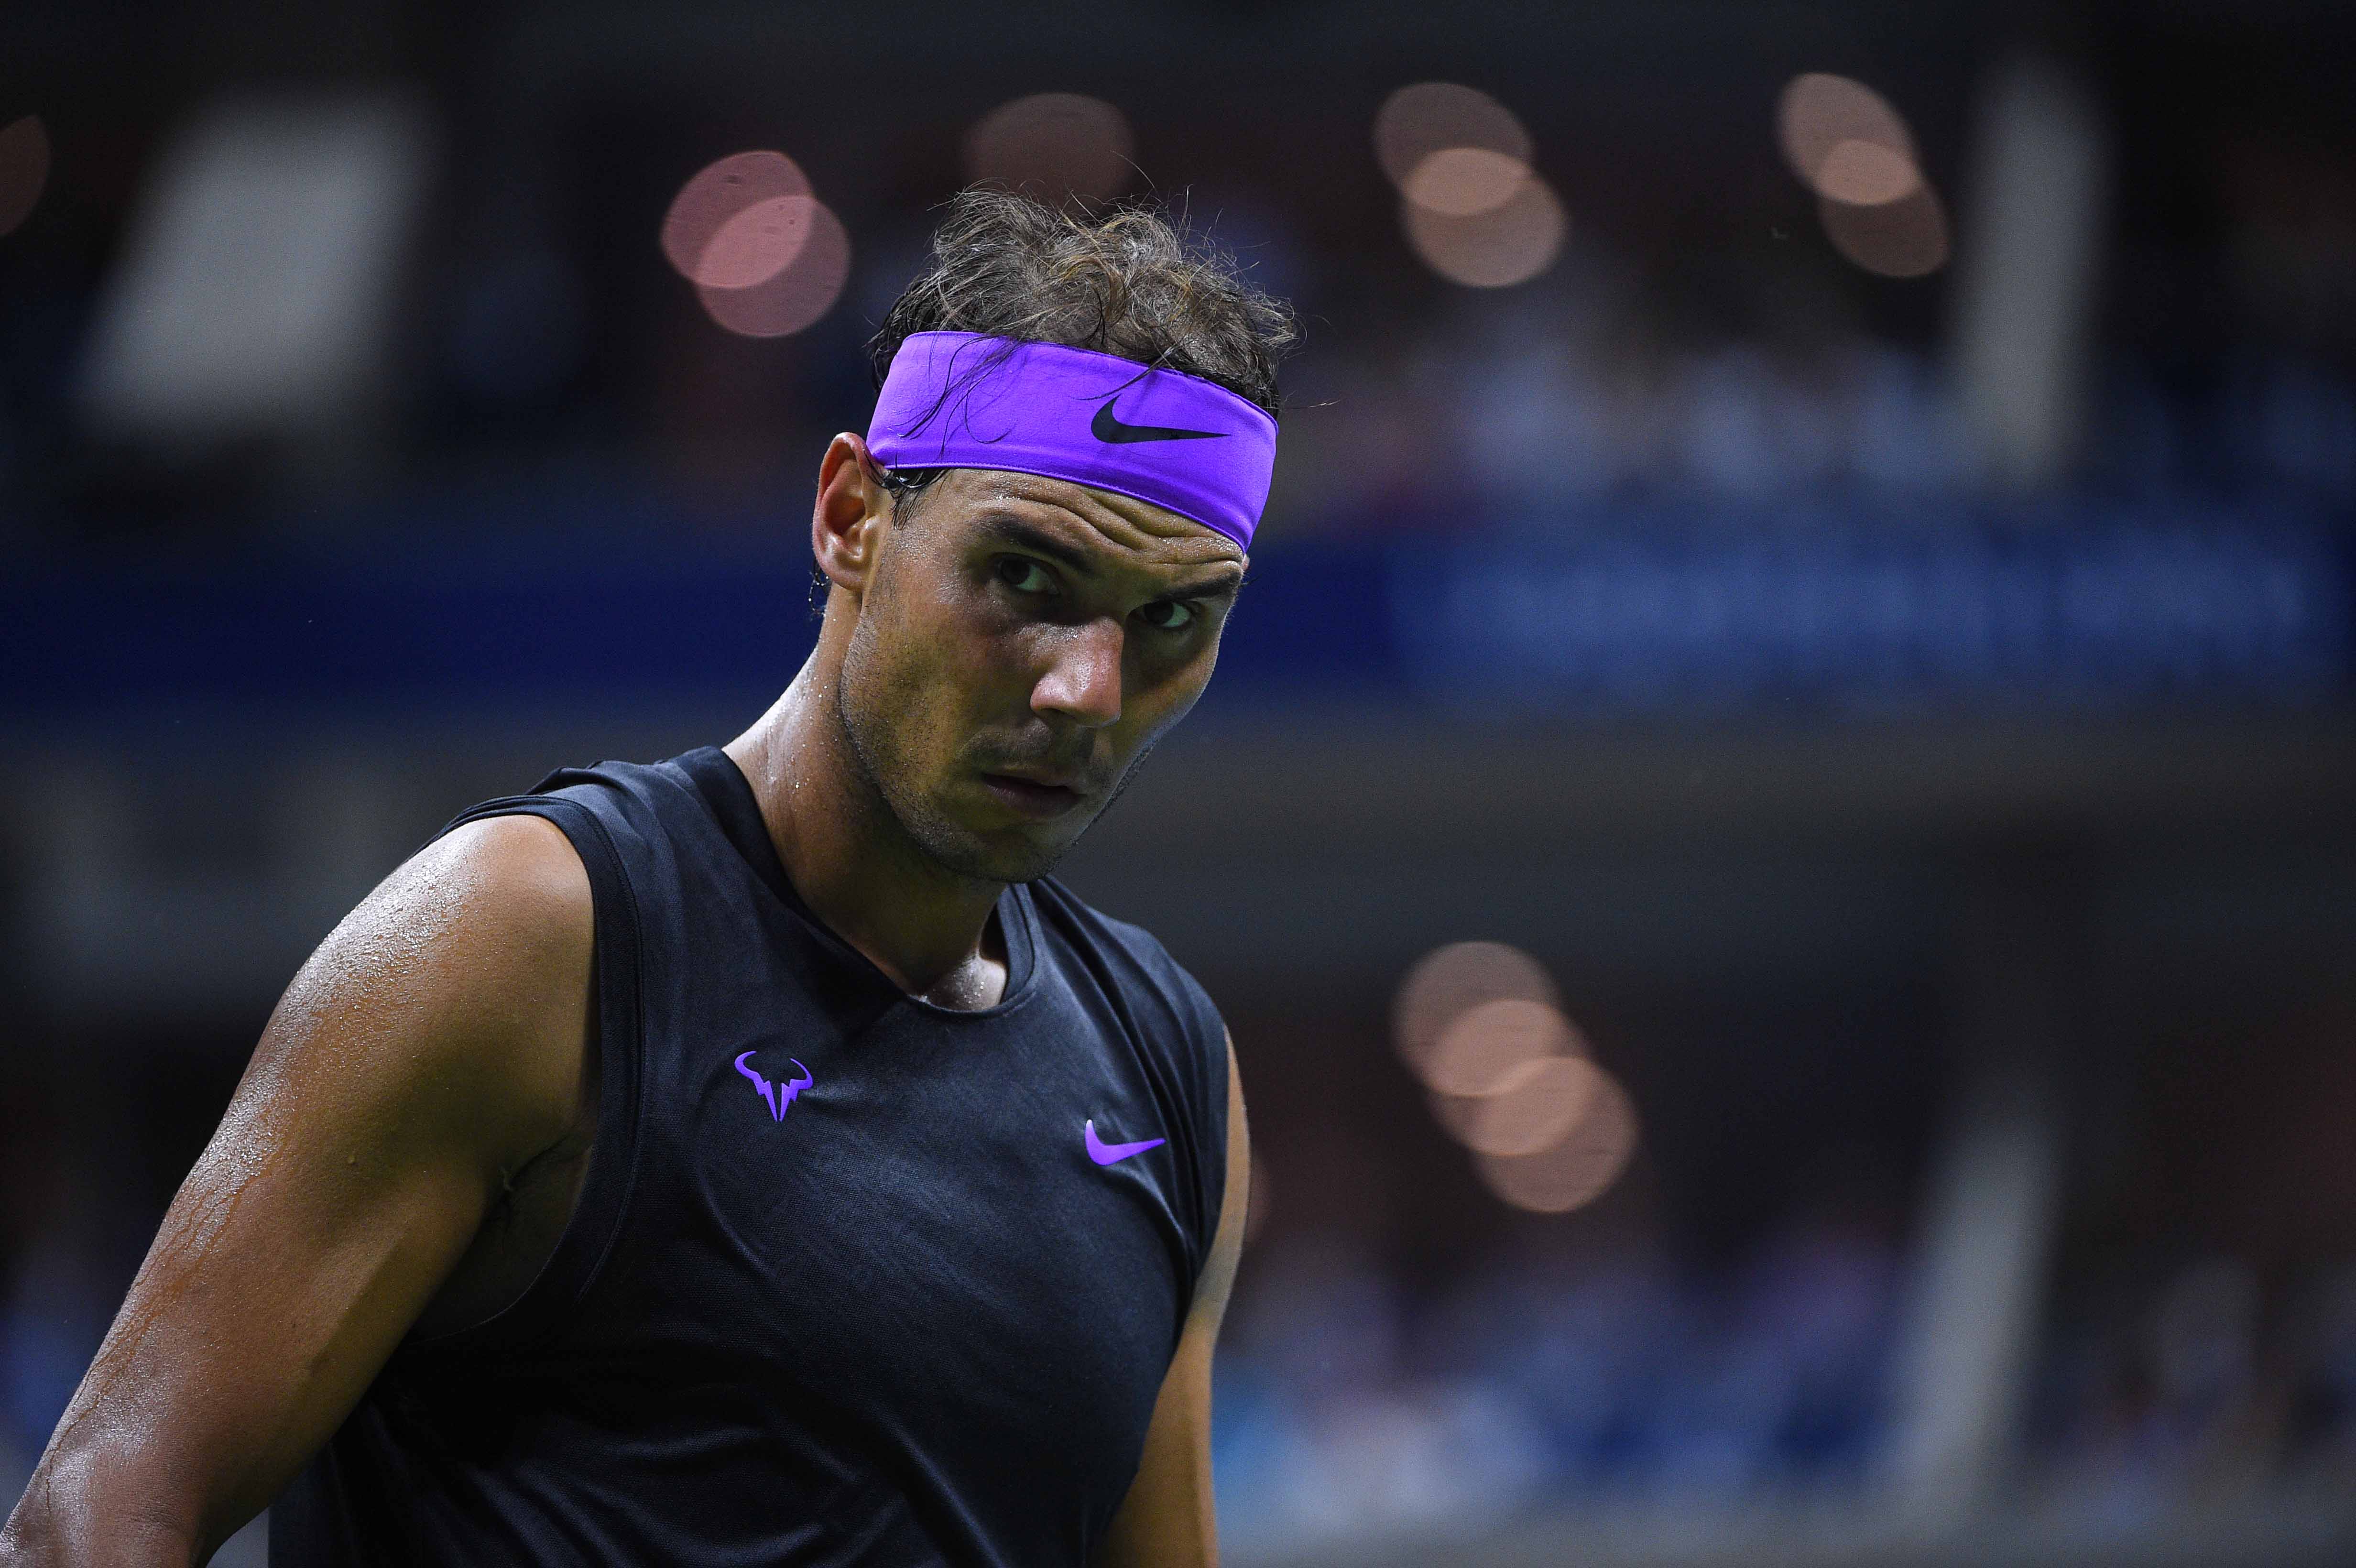 Omens look good for dominant Nadal - Roland-Garros - The 2020 Roland-Garros Tournament ...